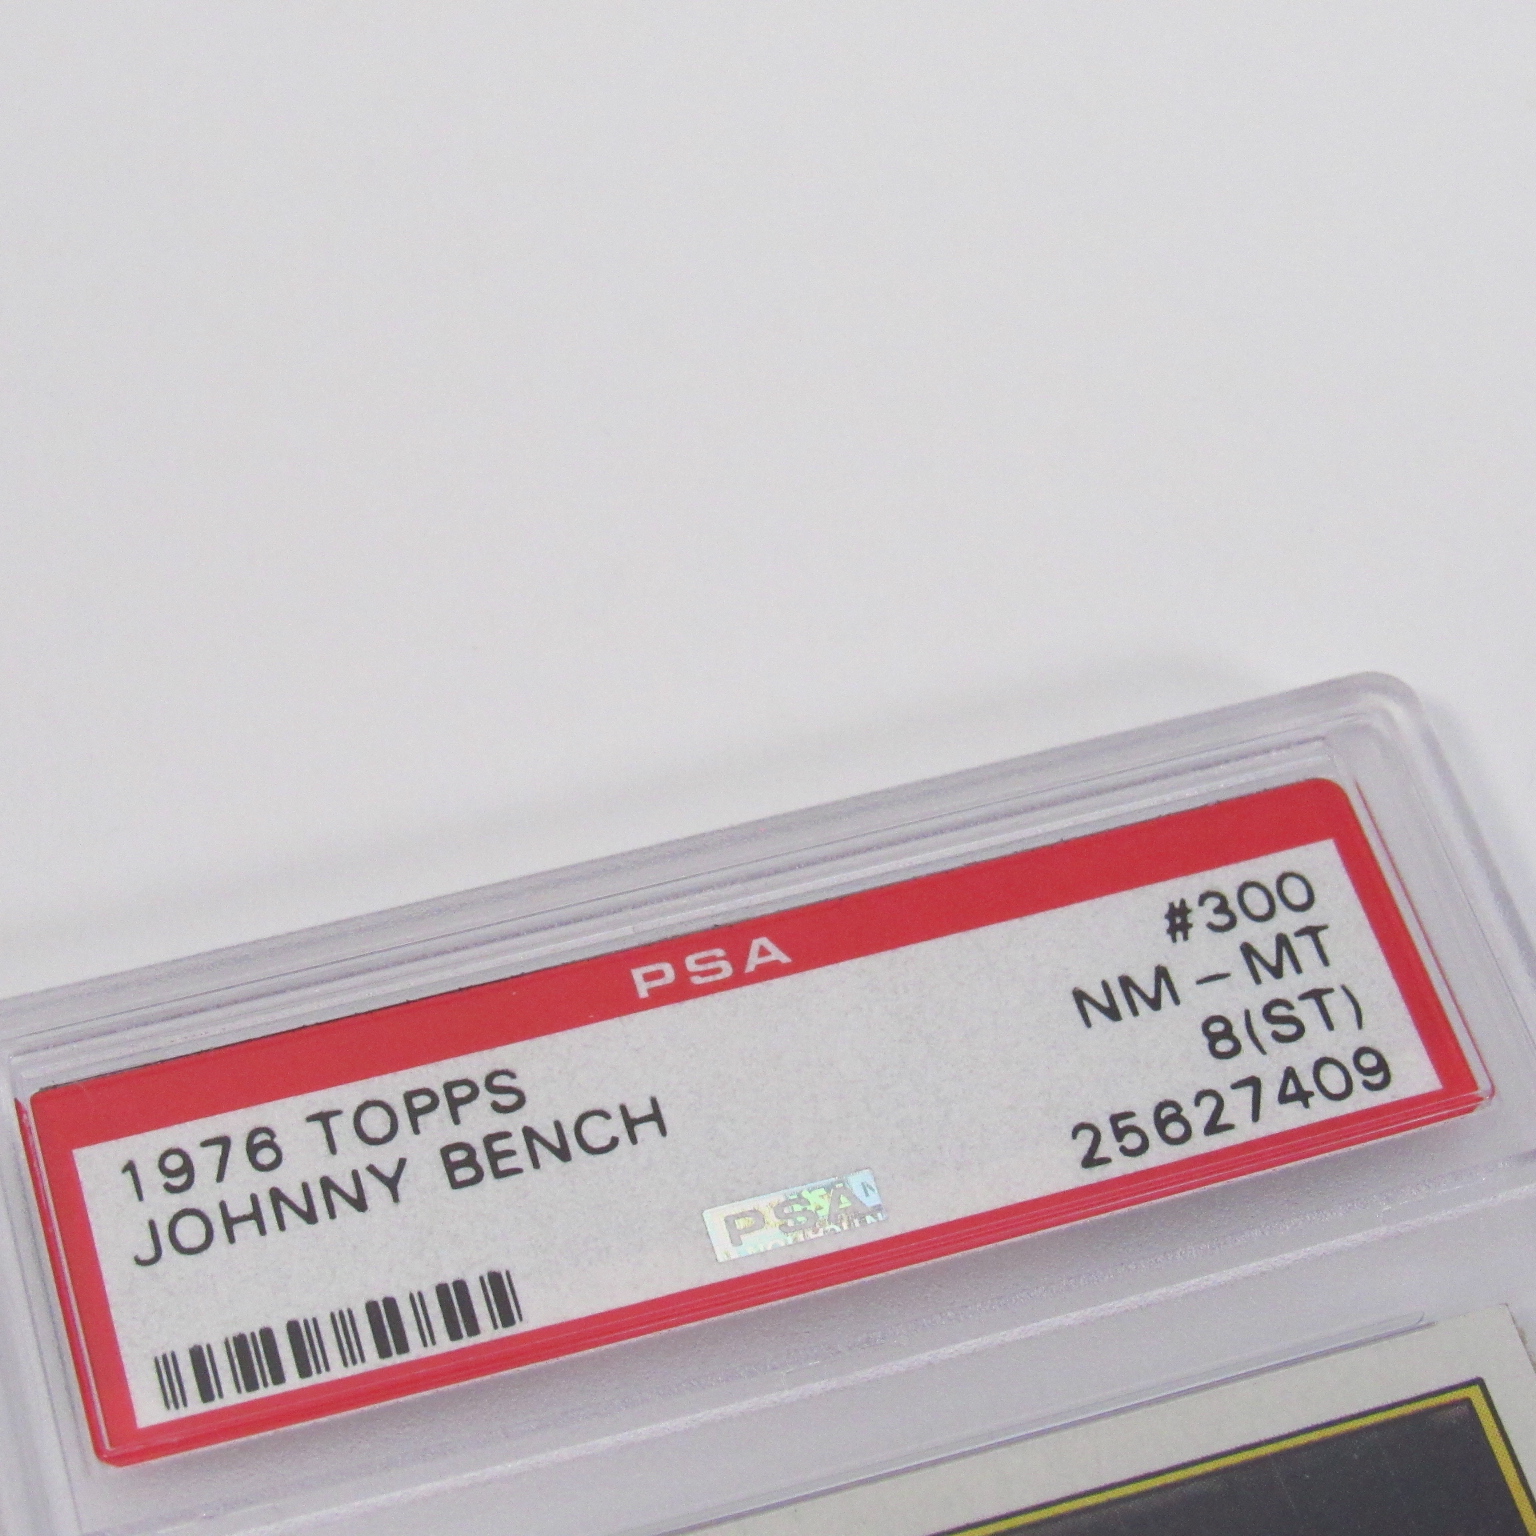 1976 Topps Baseball Card #300 Johnny Bench